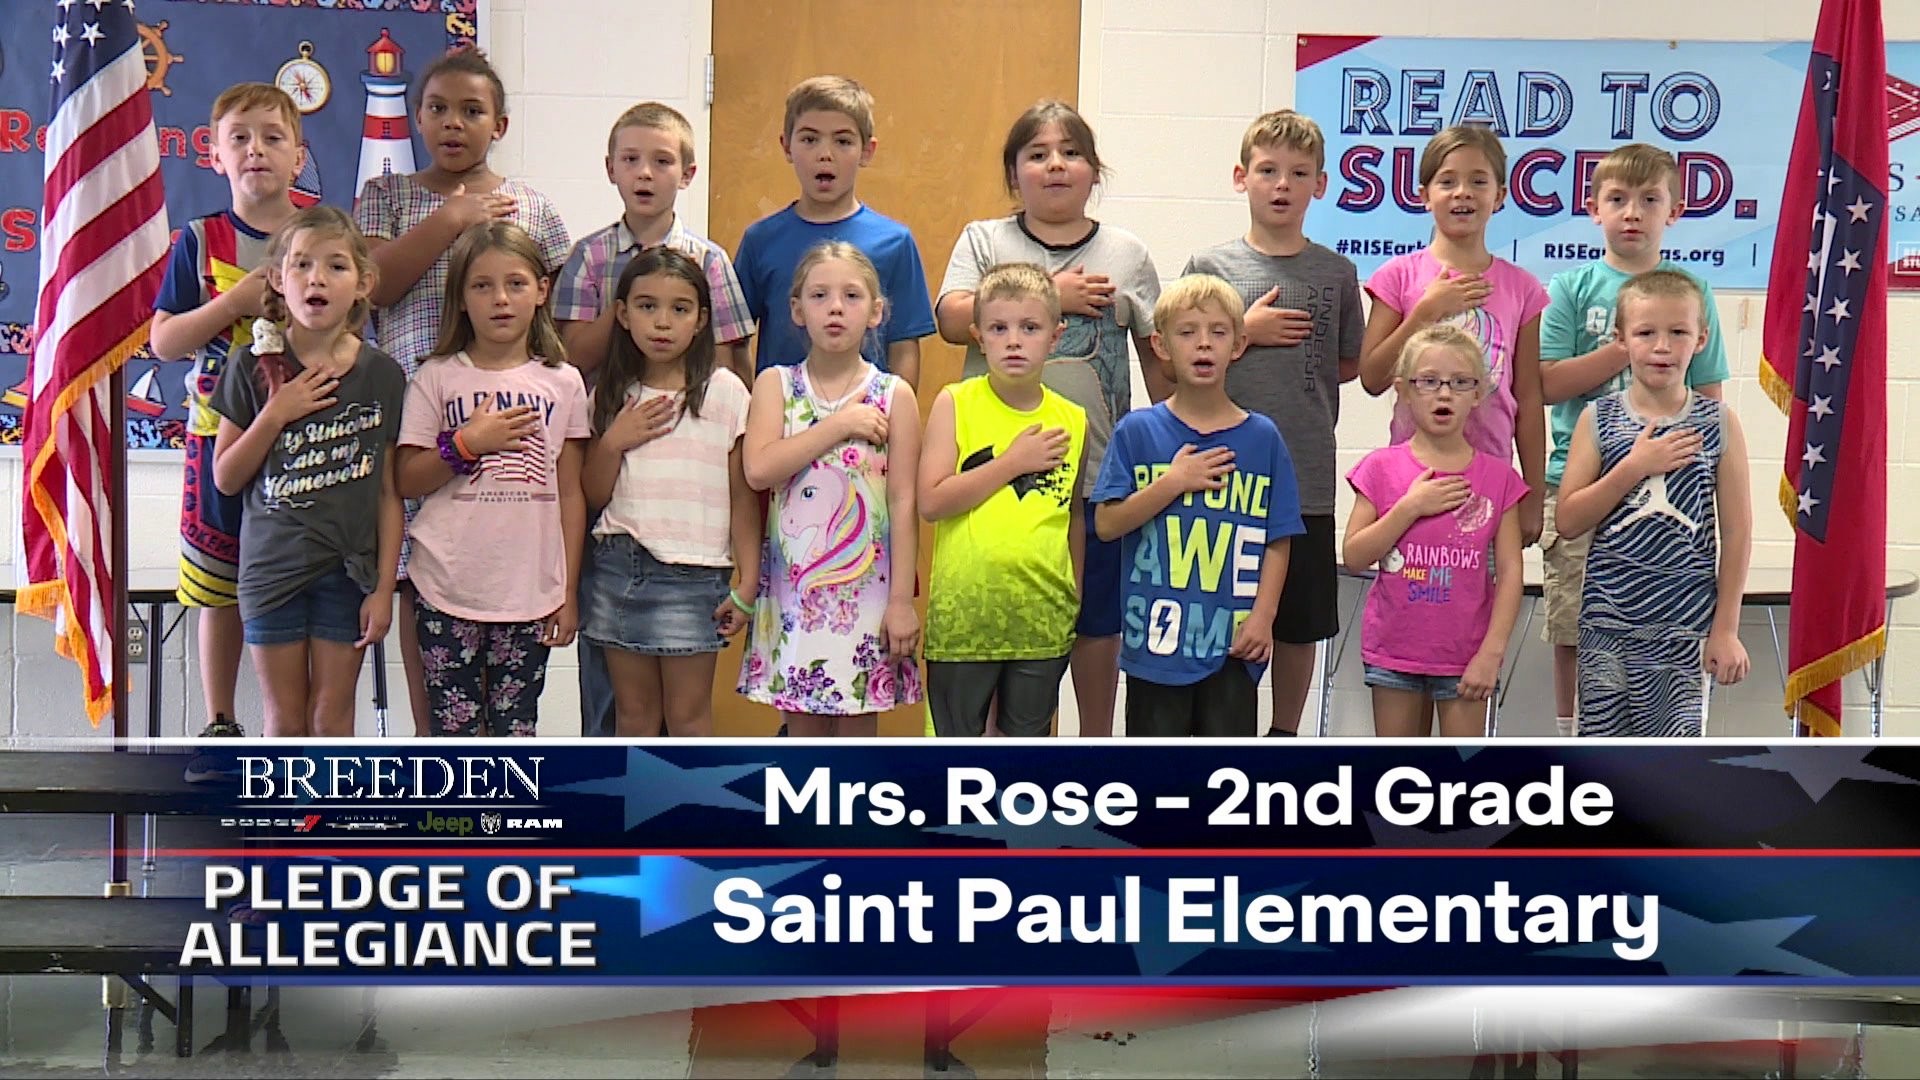 Mrs. Rose  - 2nd Grade Saint Paul Elementary